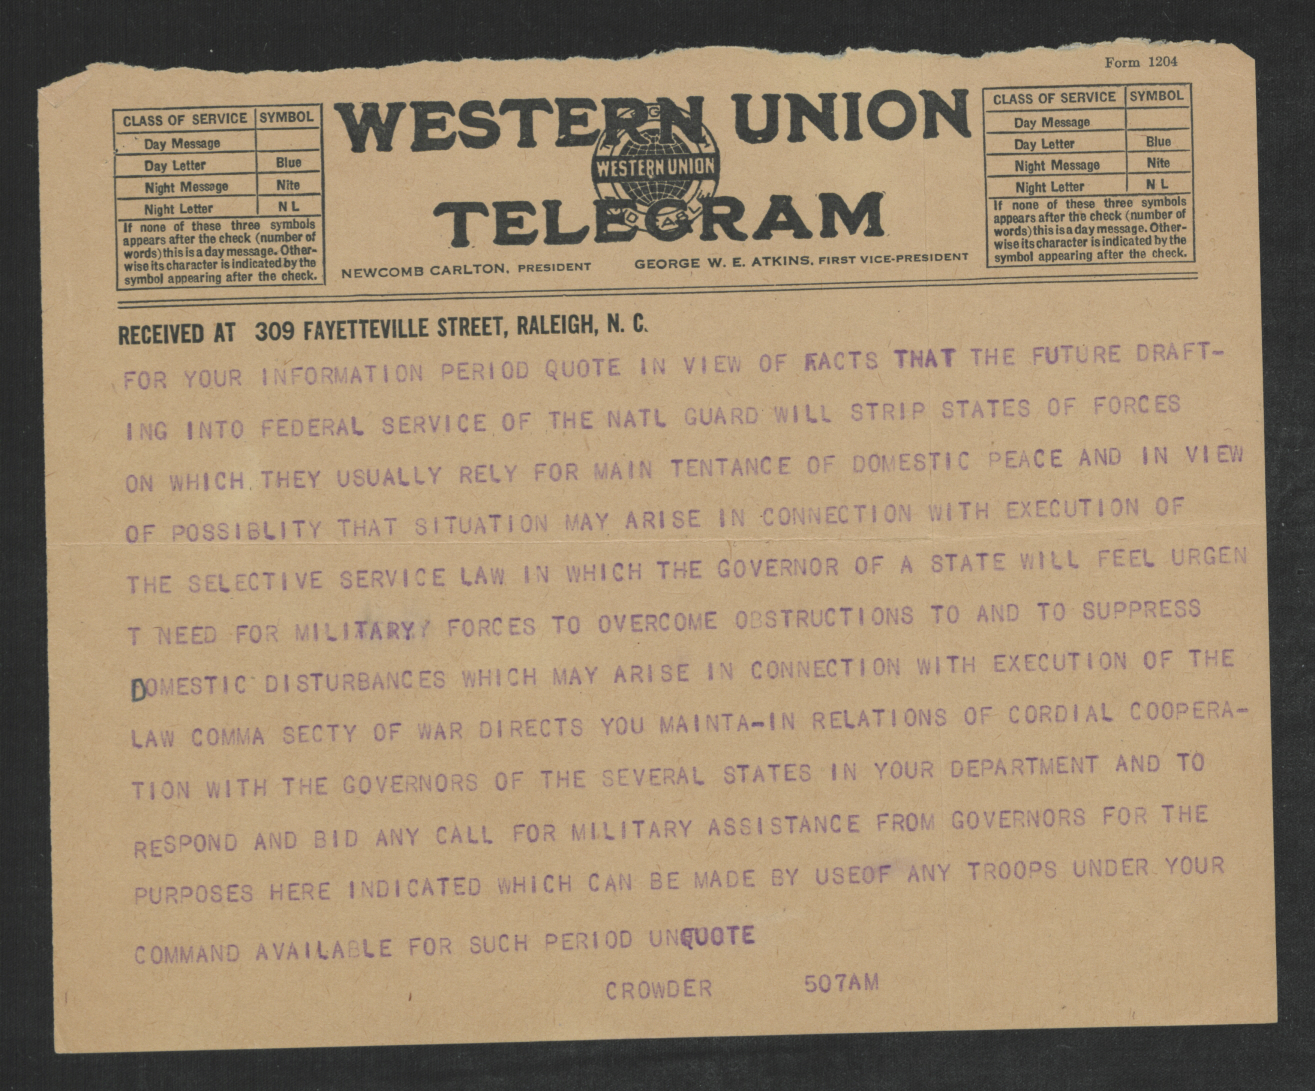 Telegram from Enoch H. Crowder to Thomas W. Bickett, June 3, 1917, page 2